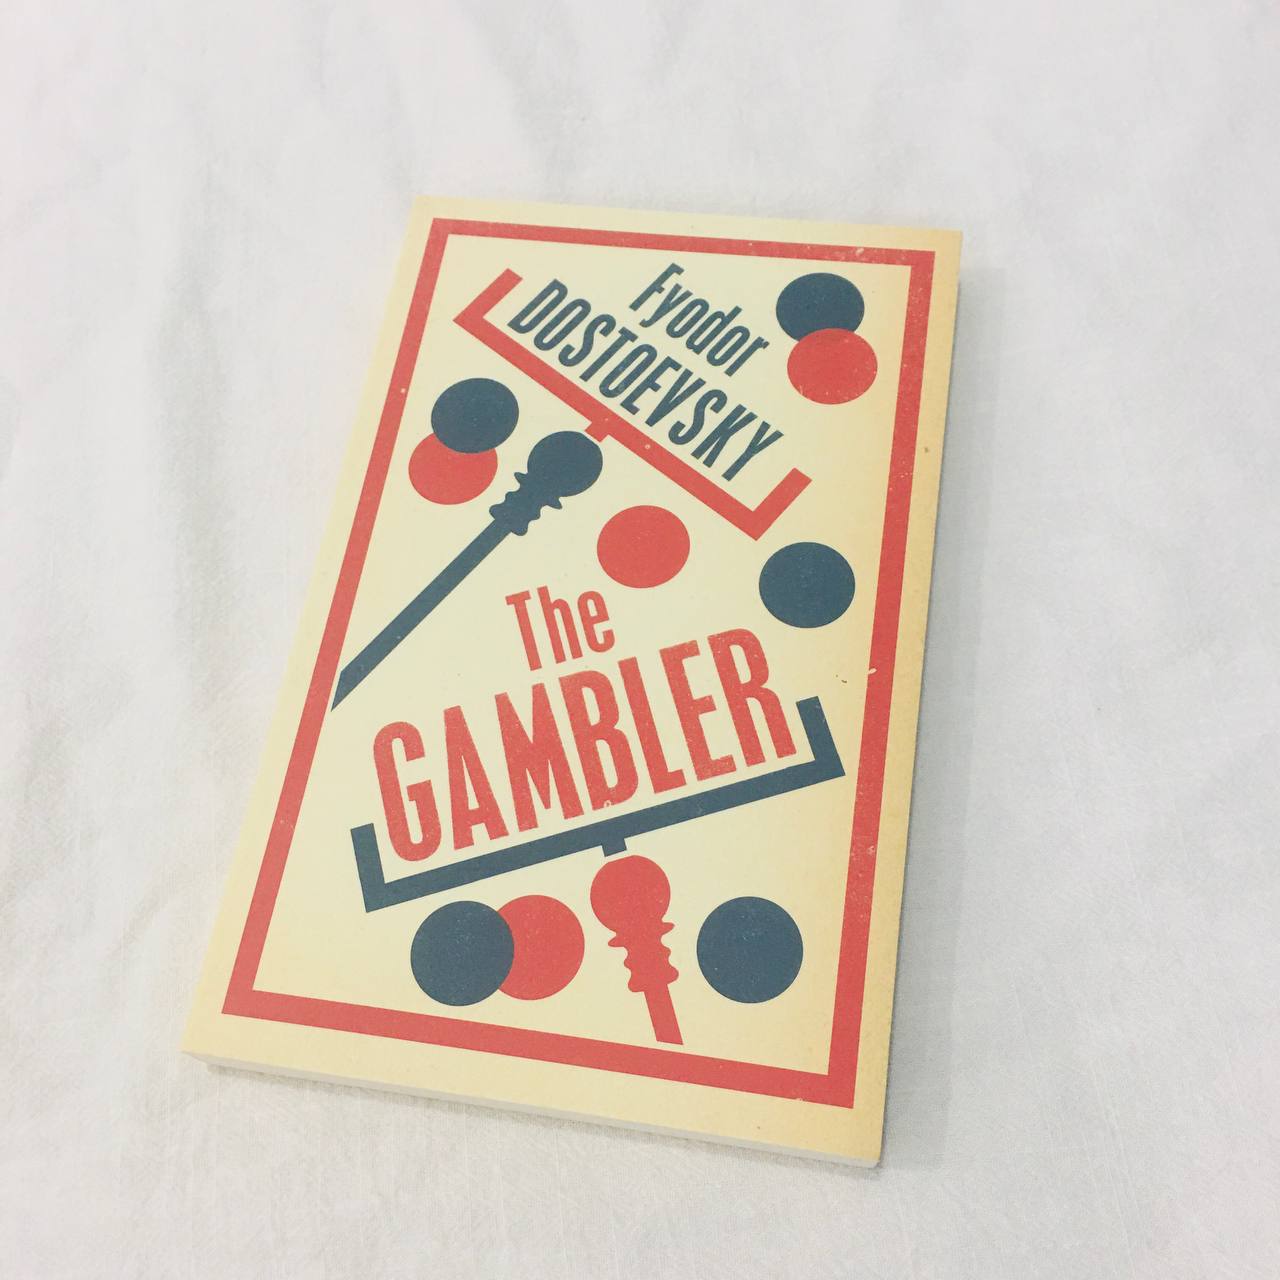 Sách The Gambler by Fyodor Dostoevsky (Alma Classics)